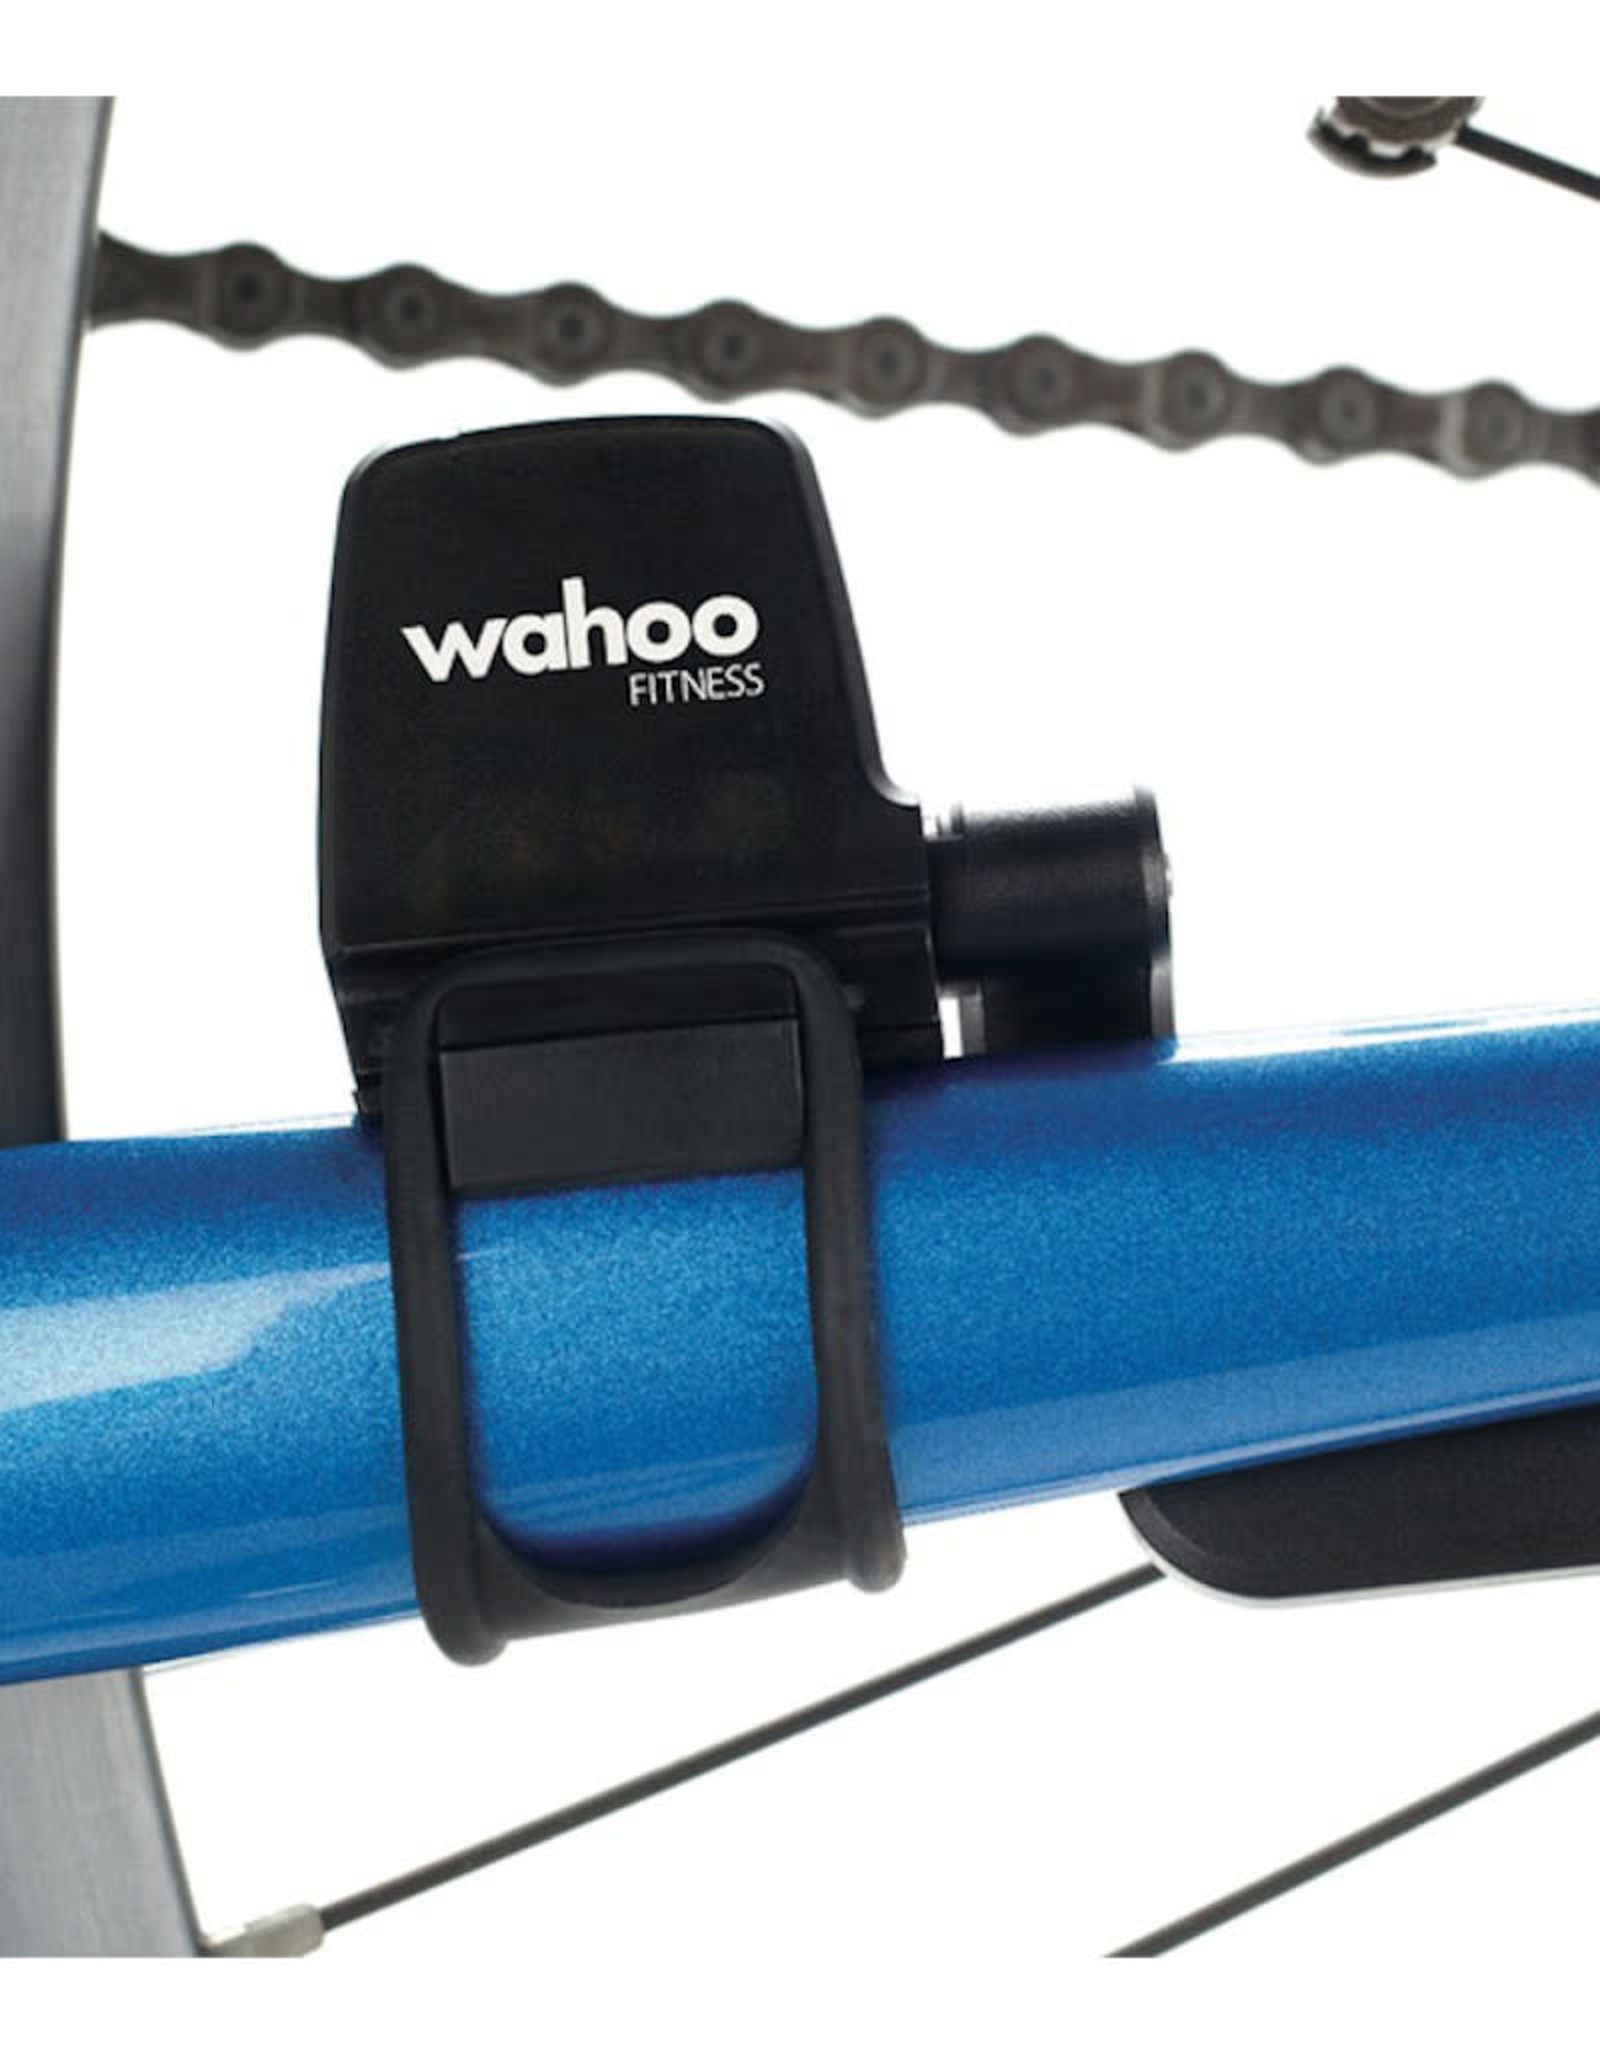 mount wahoo cadence sensor